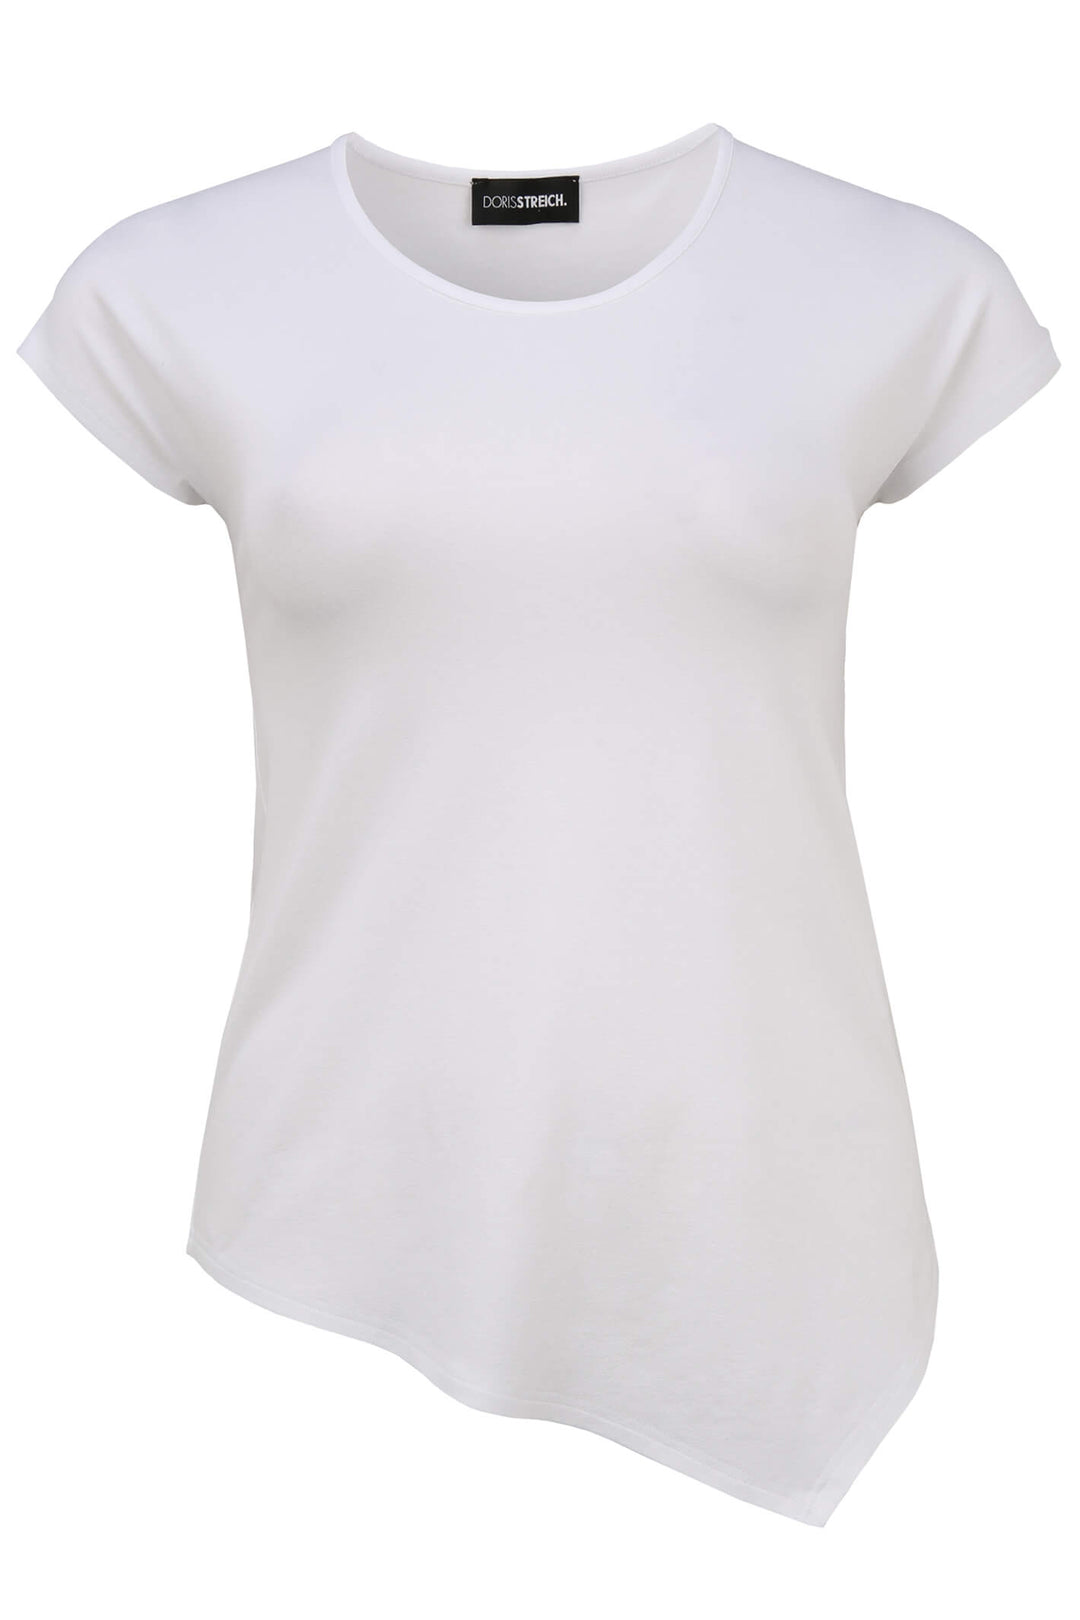 Doris Streich 501 270 White Asymmetric Hem T-Shirt - Shirley Allum Boutique